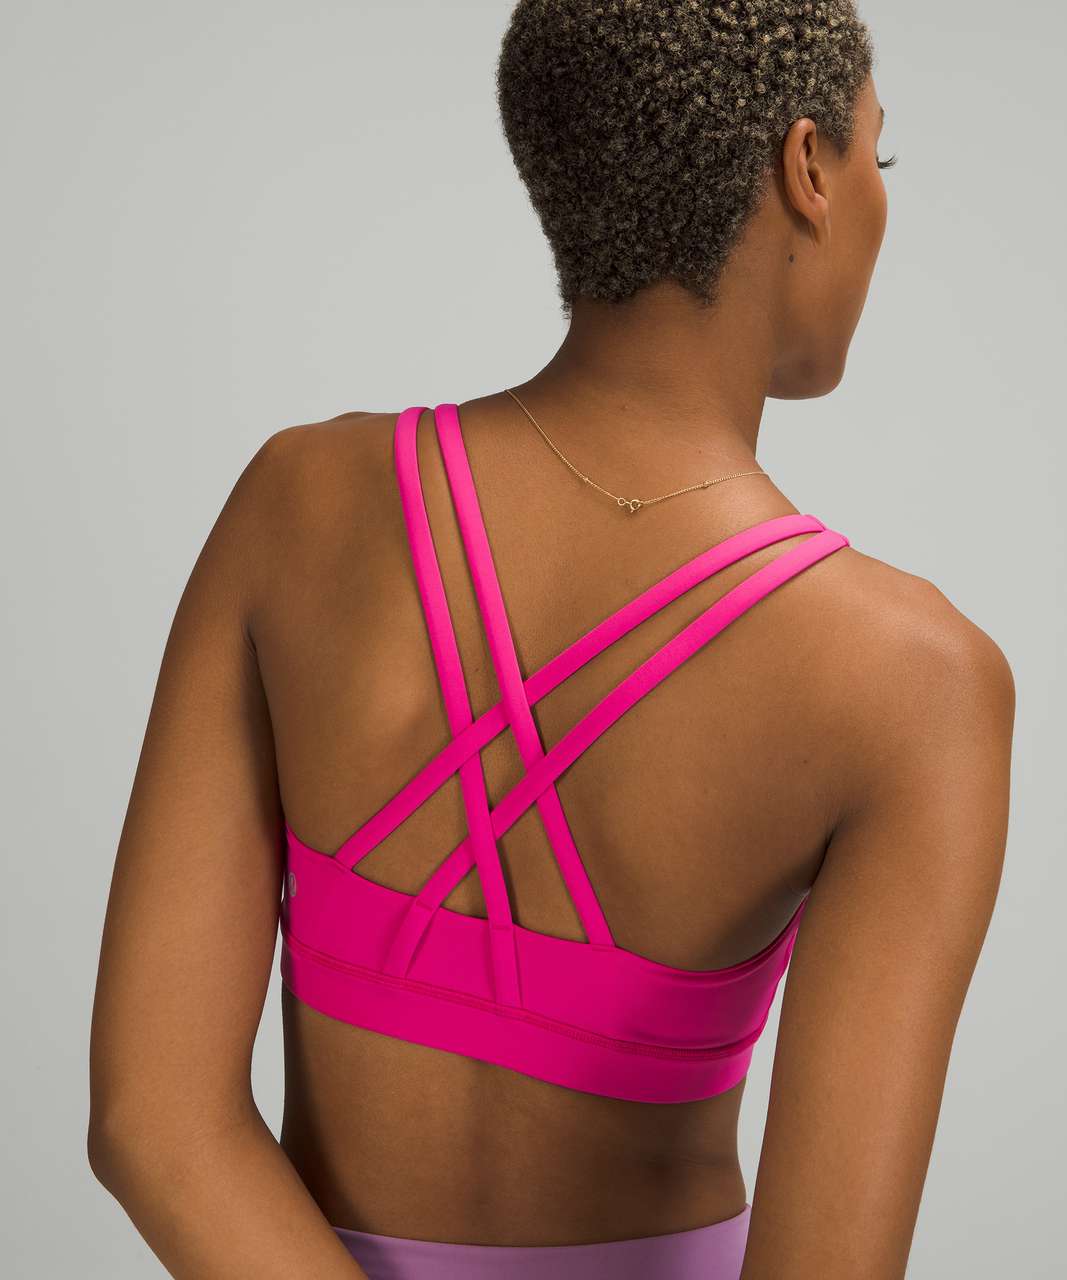 Lululemon sonic pink energy bra Size M - $43 (52% Off Retail